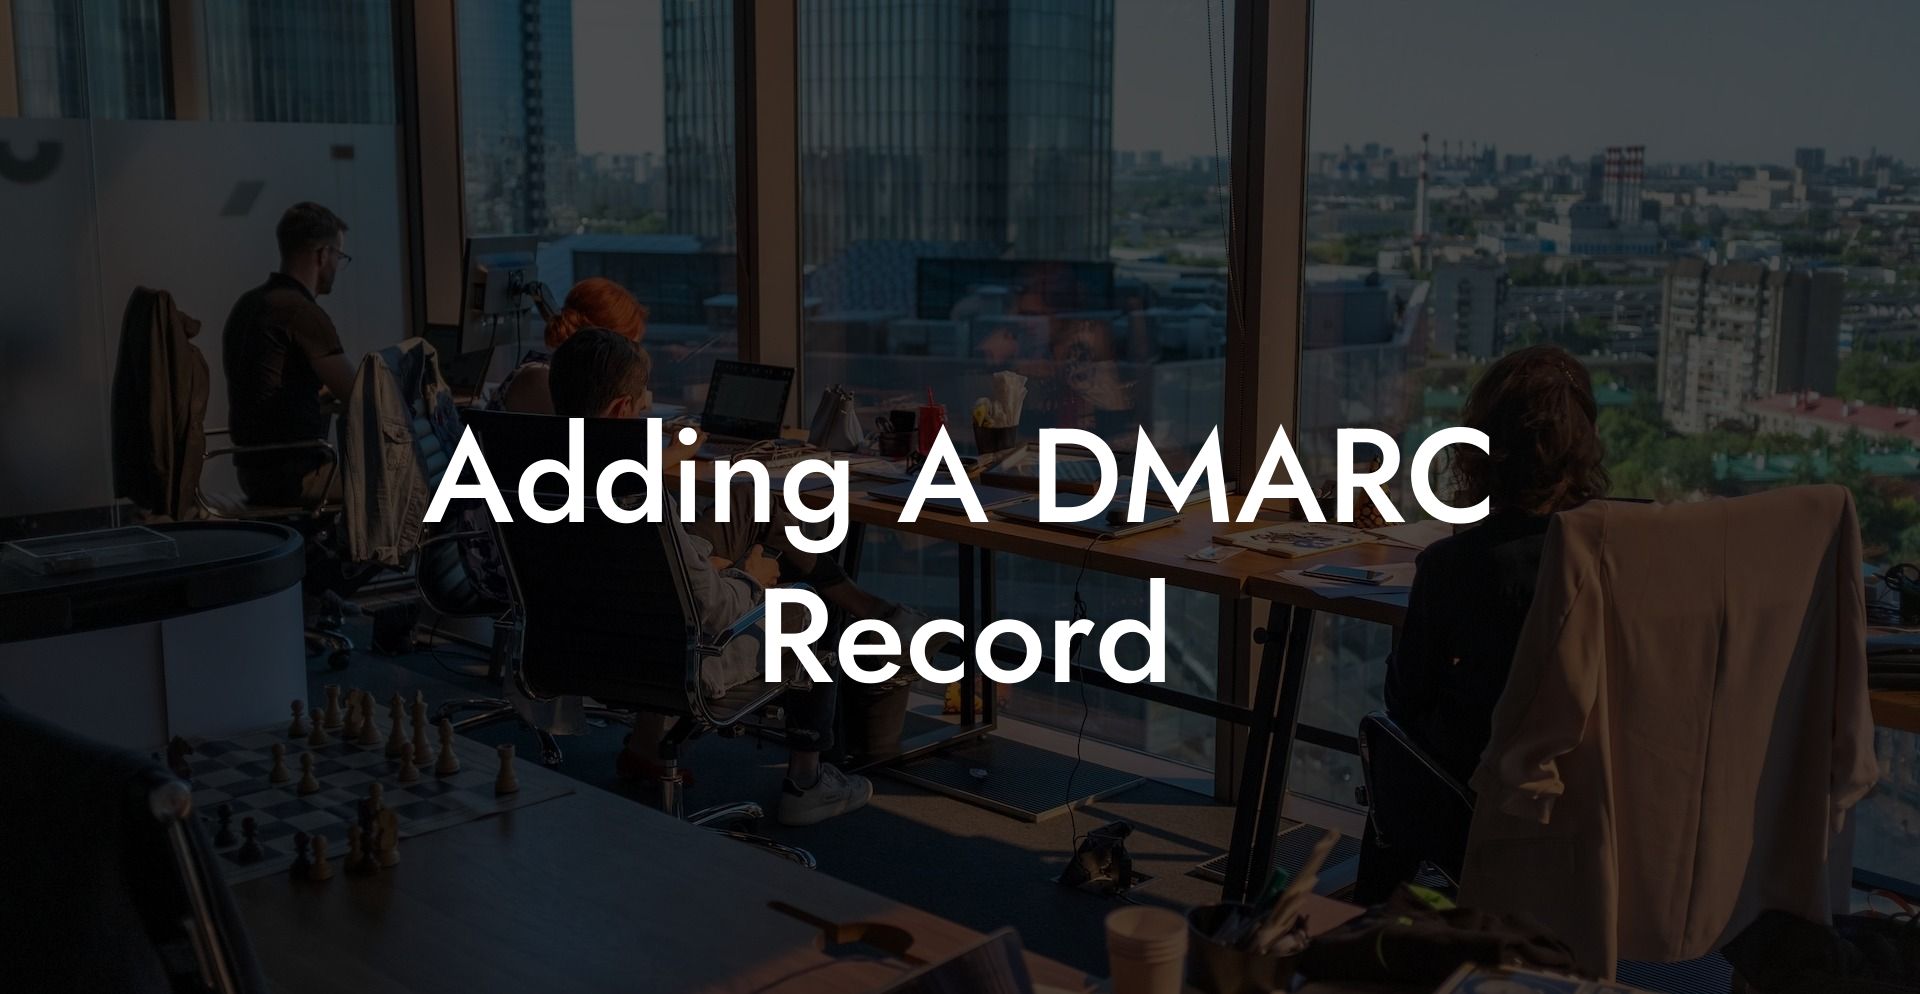 Adding A DMARC Record